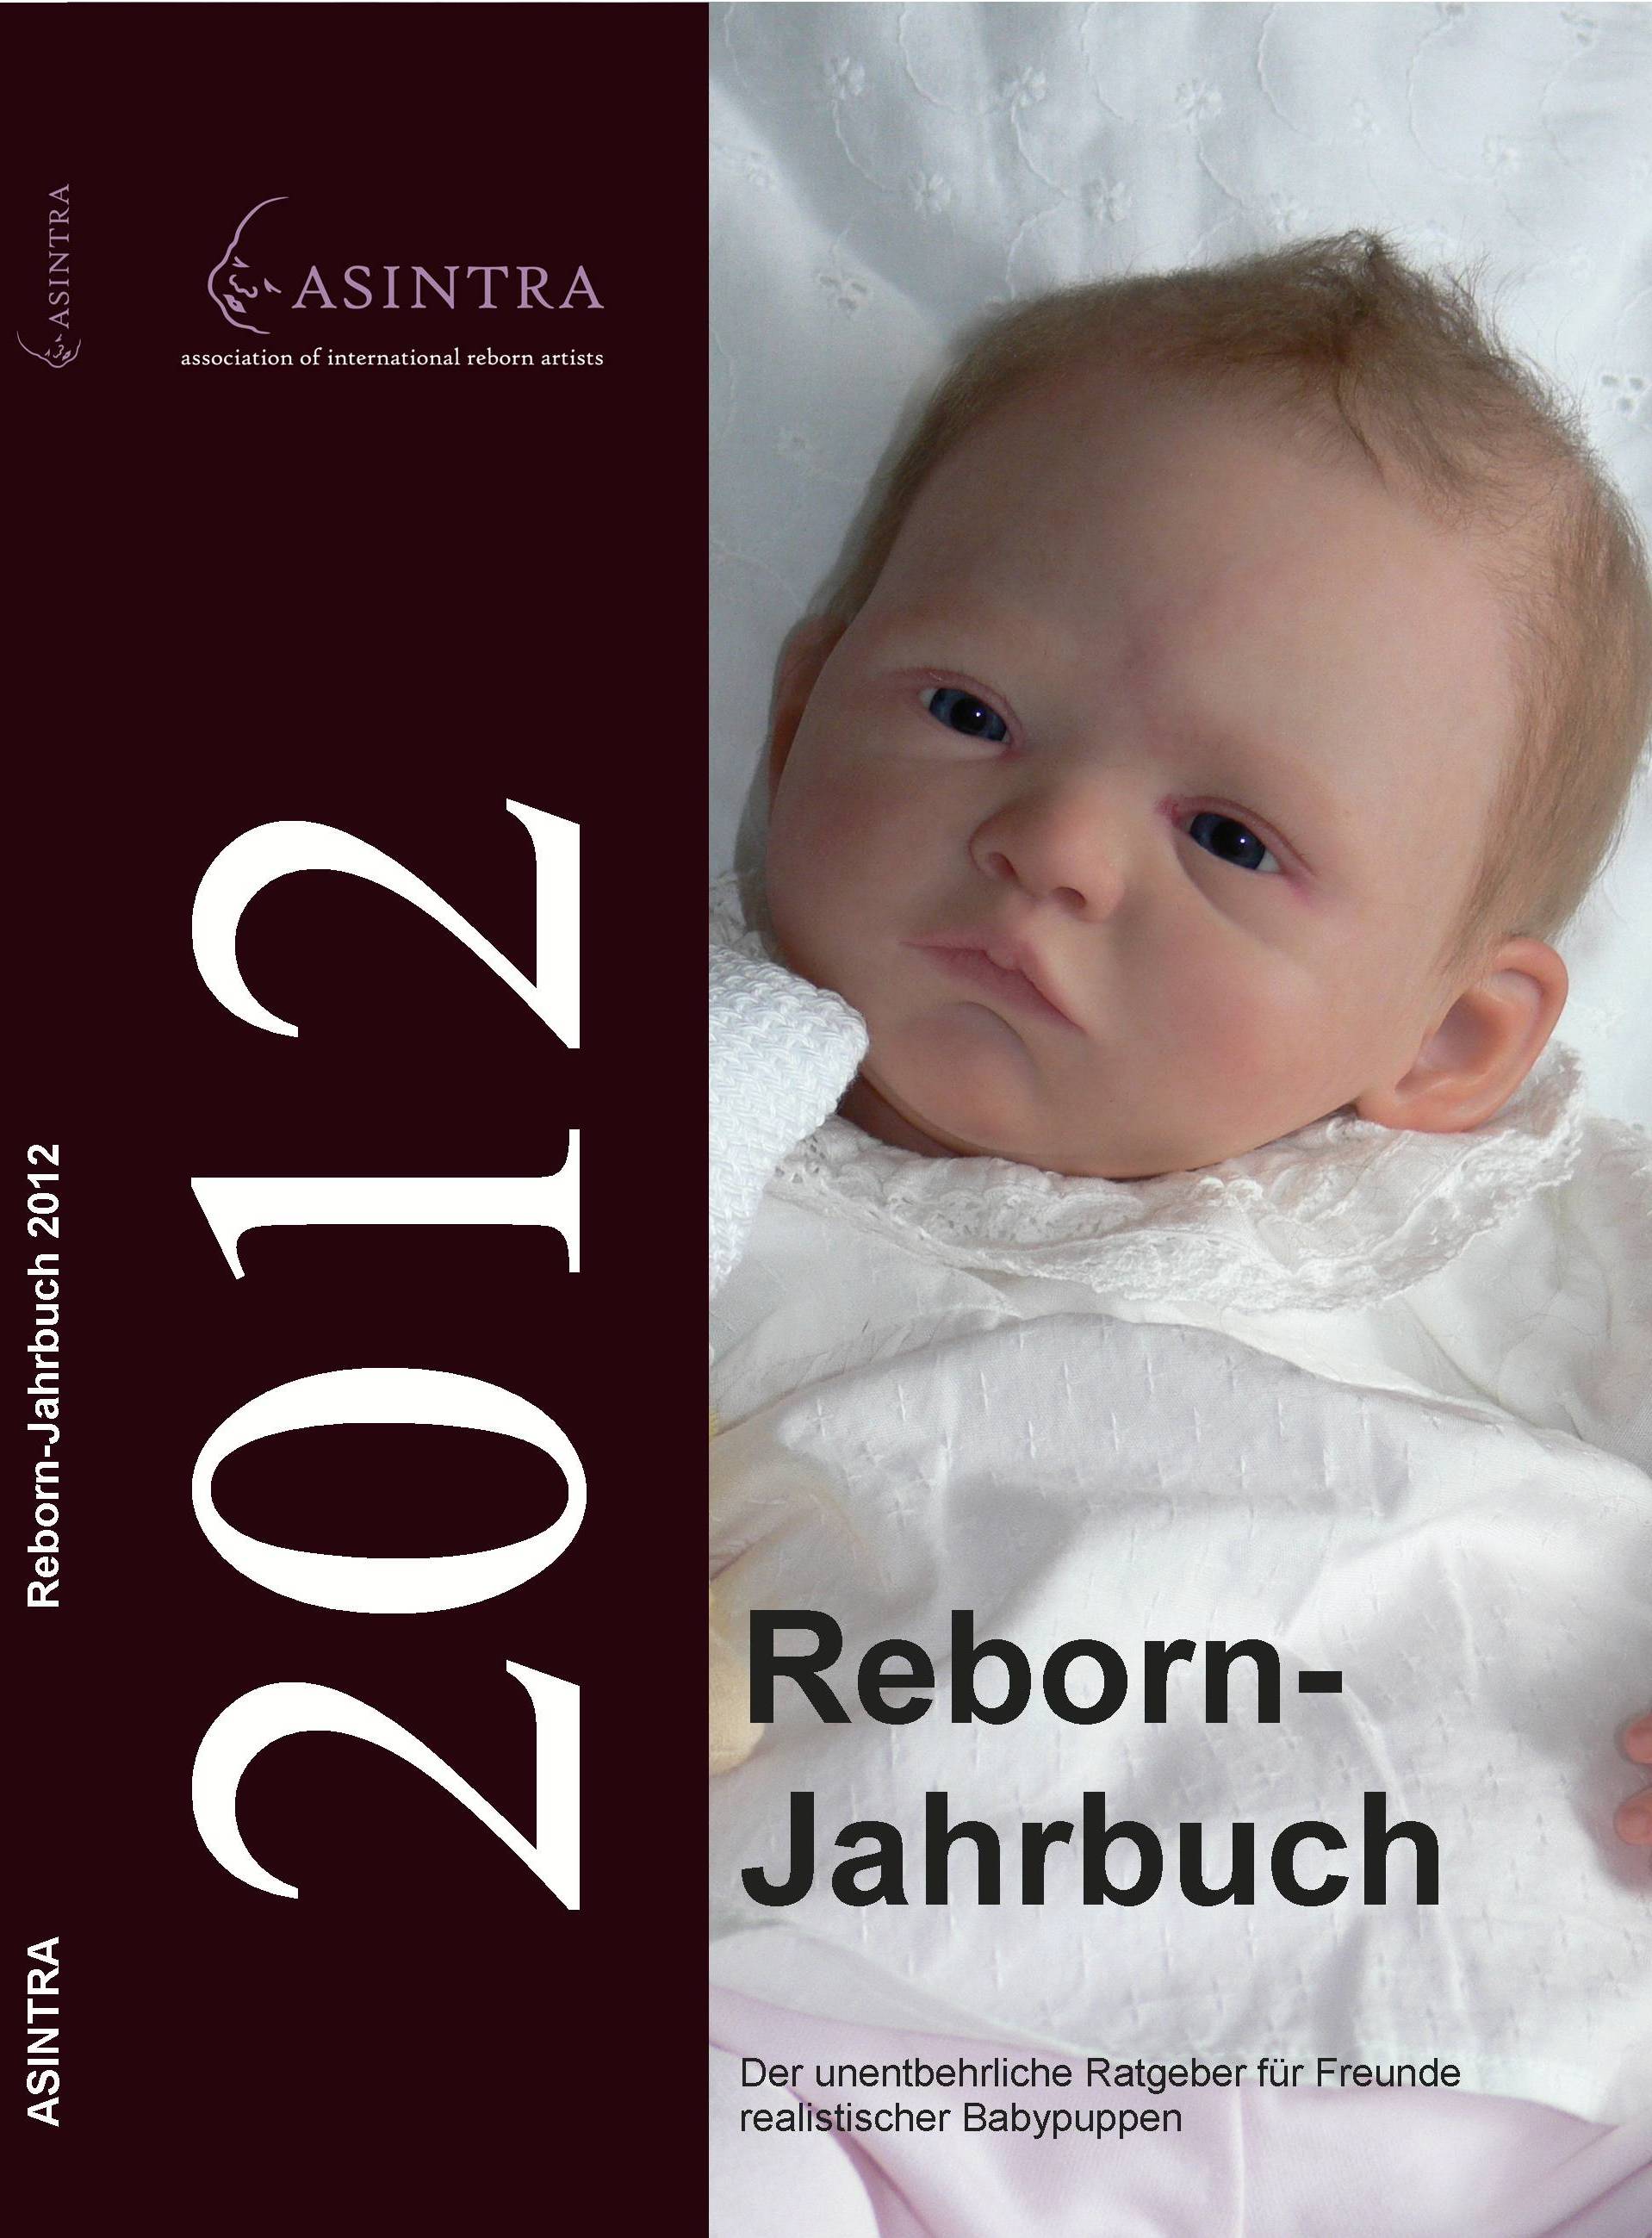 Titel Jahrbuch 2012